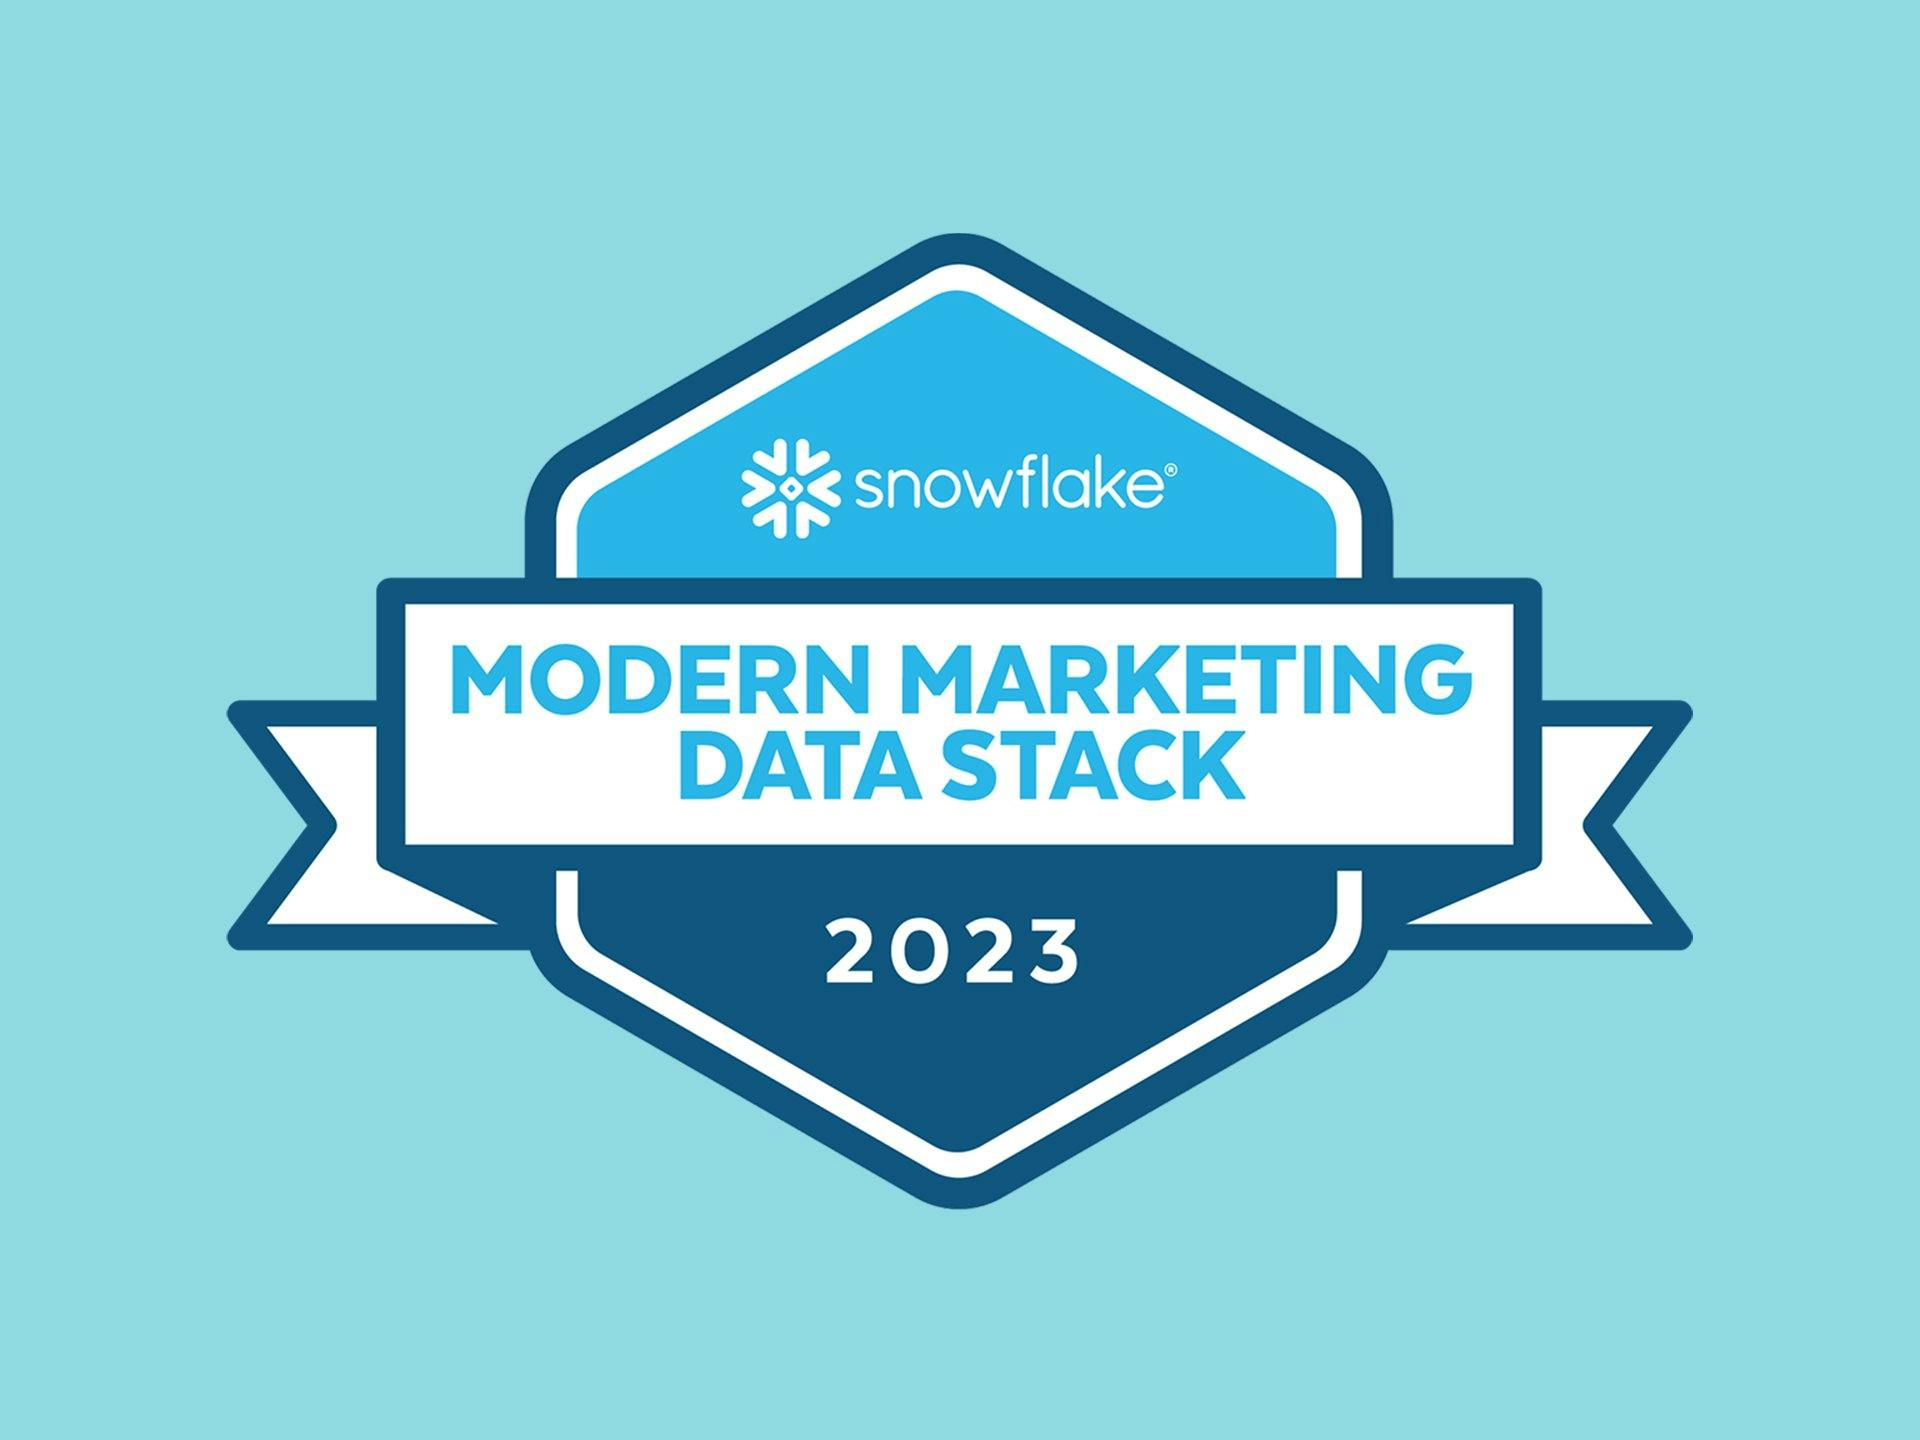 Snowflake Modern Marketing Data Stack 2023 on blue background